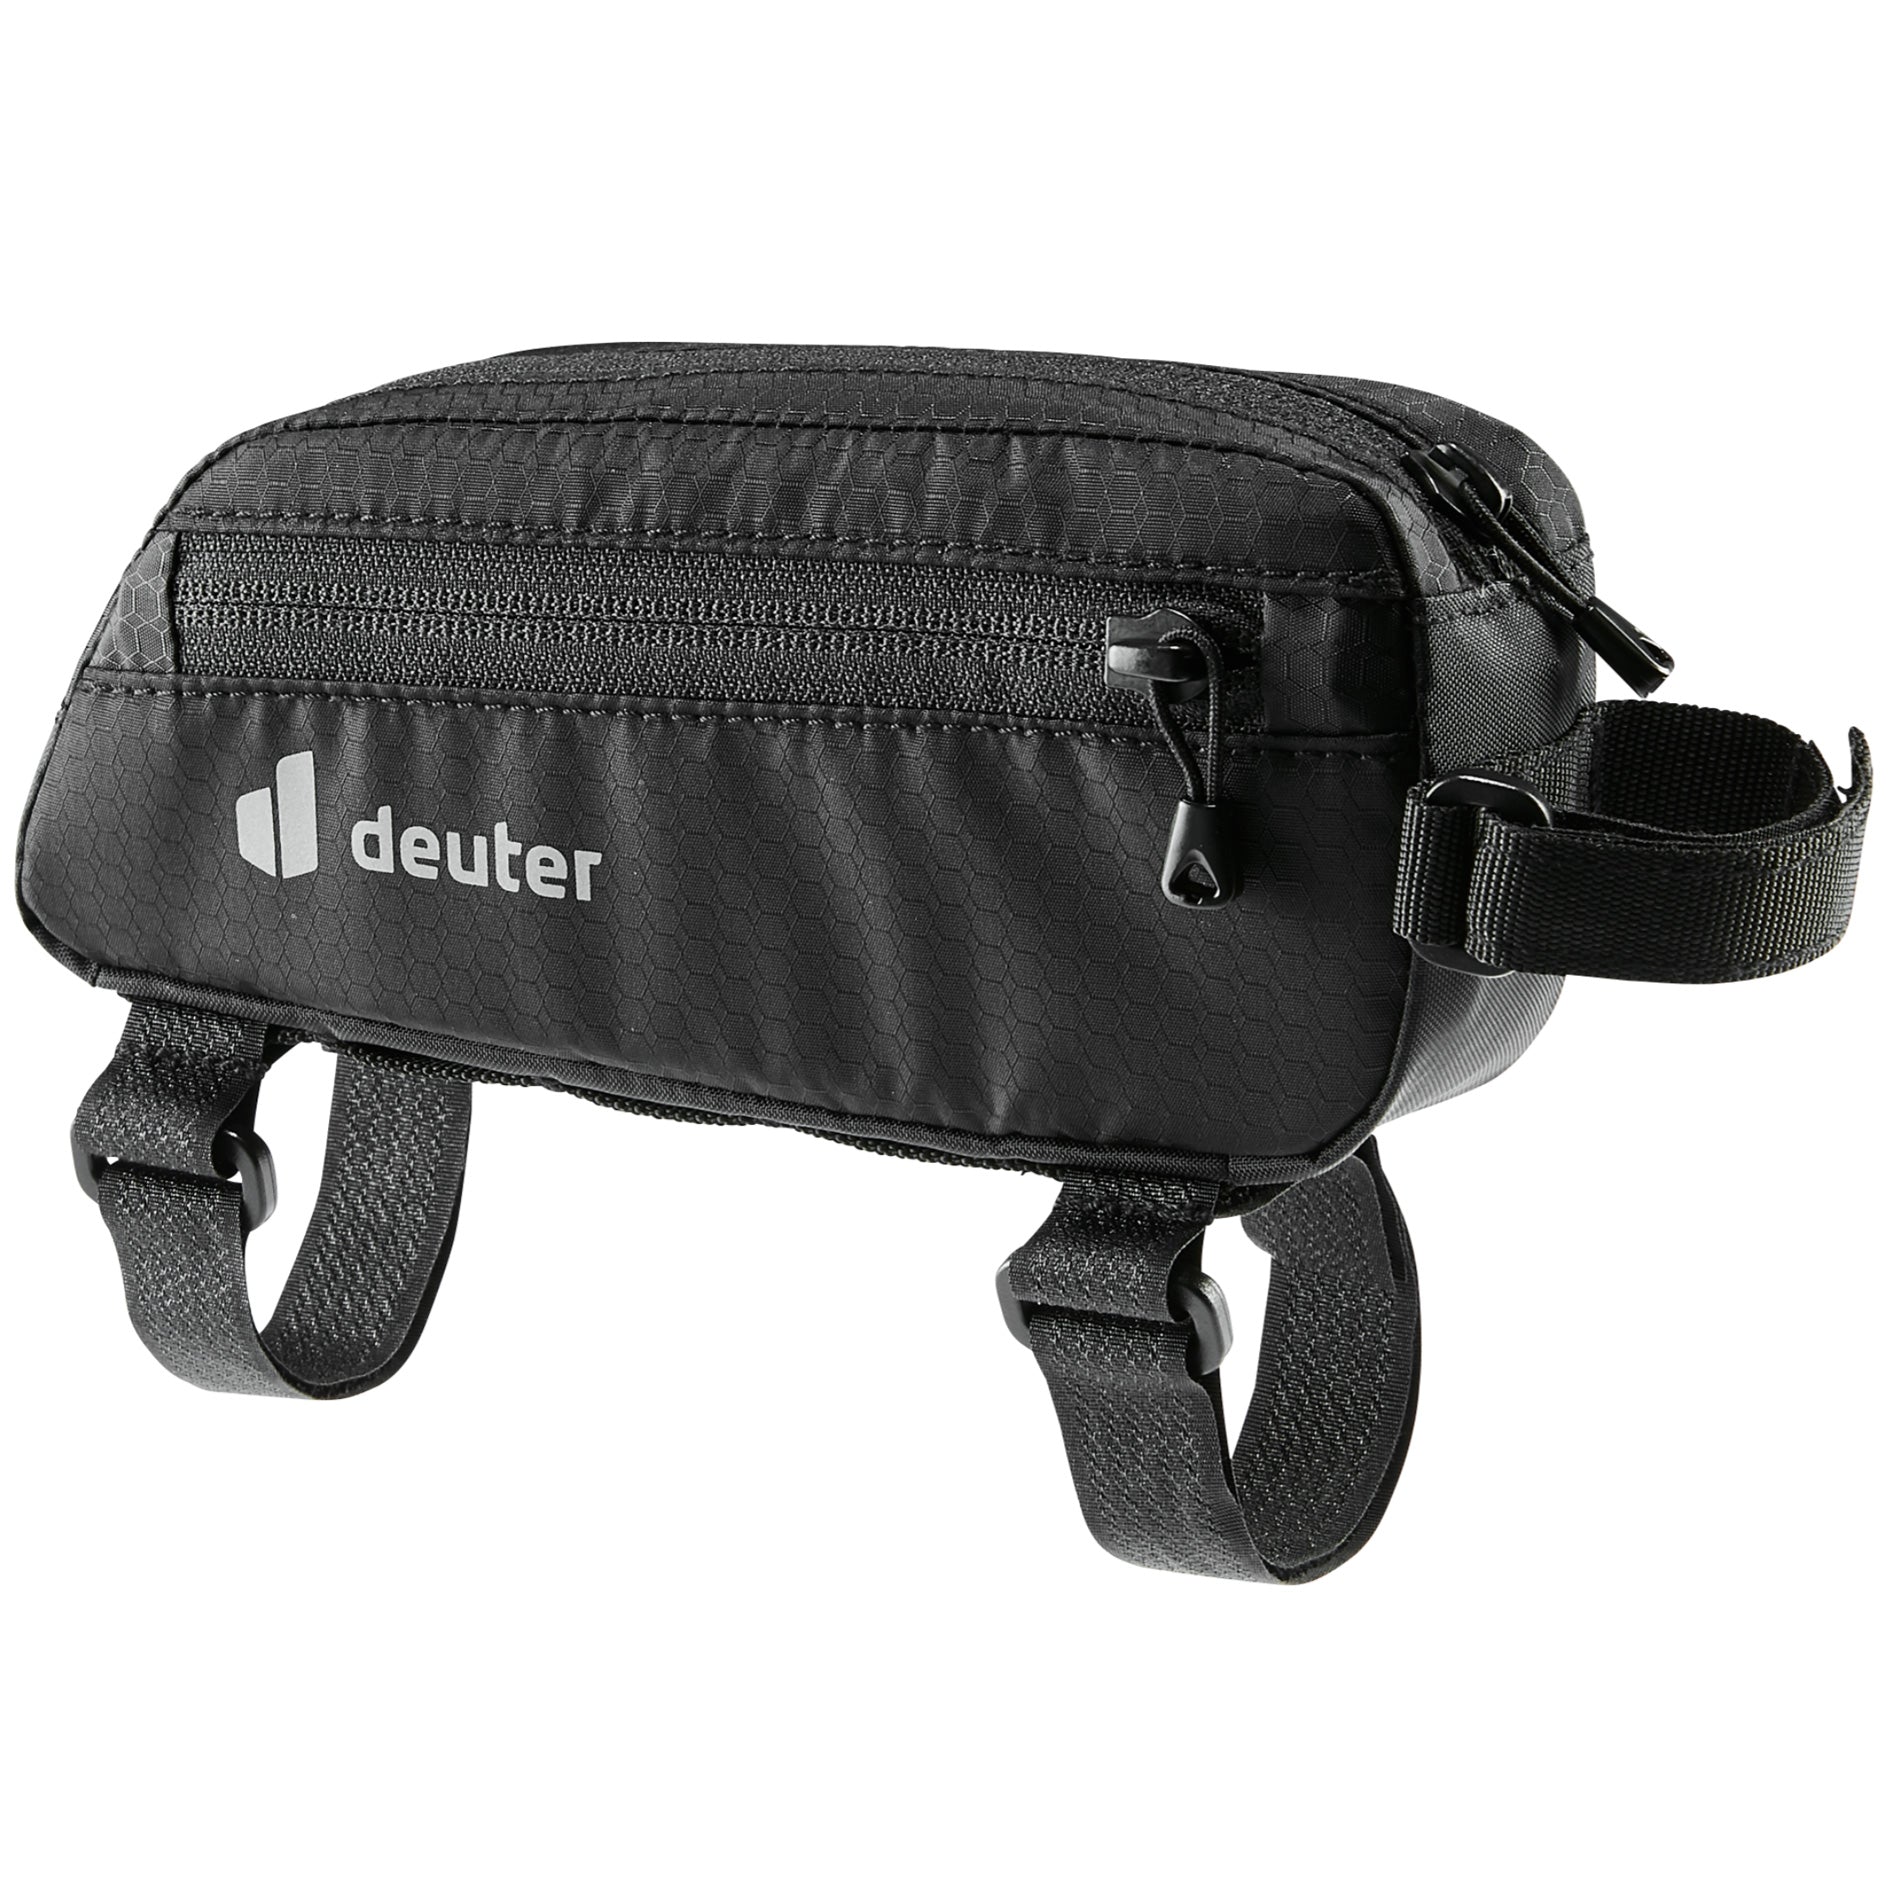 Deuter Packs Energy Bag 0.5 0.5L Strap Mount Black